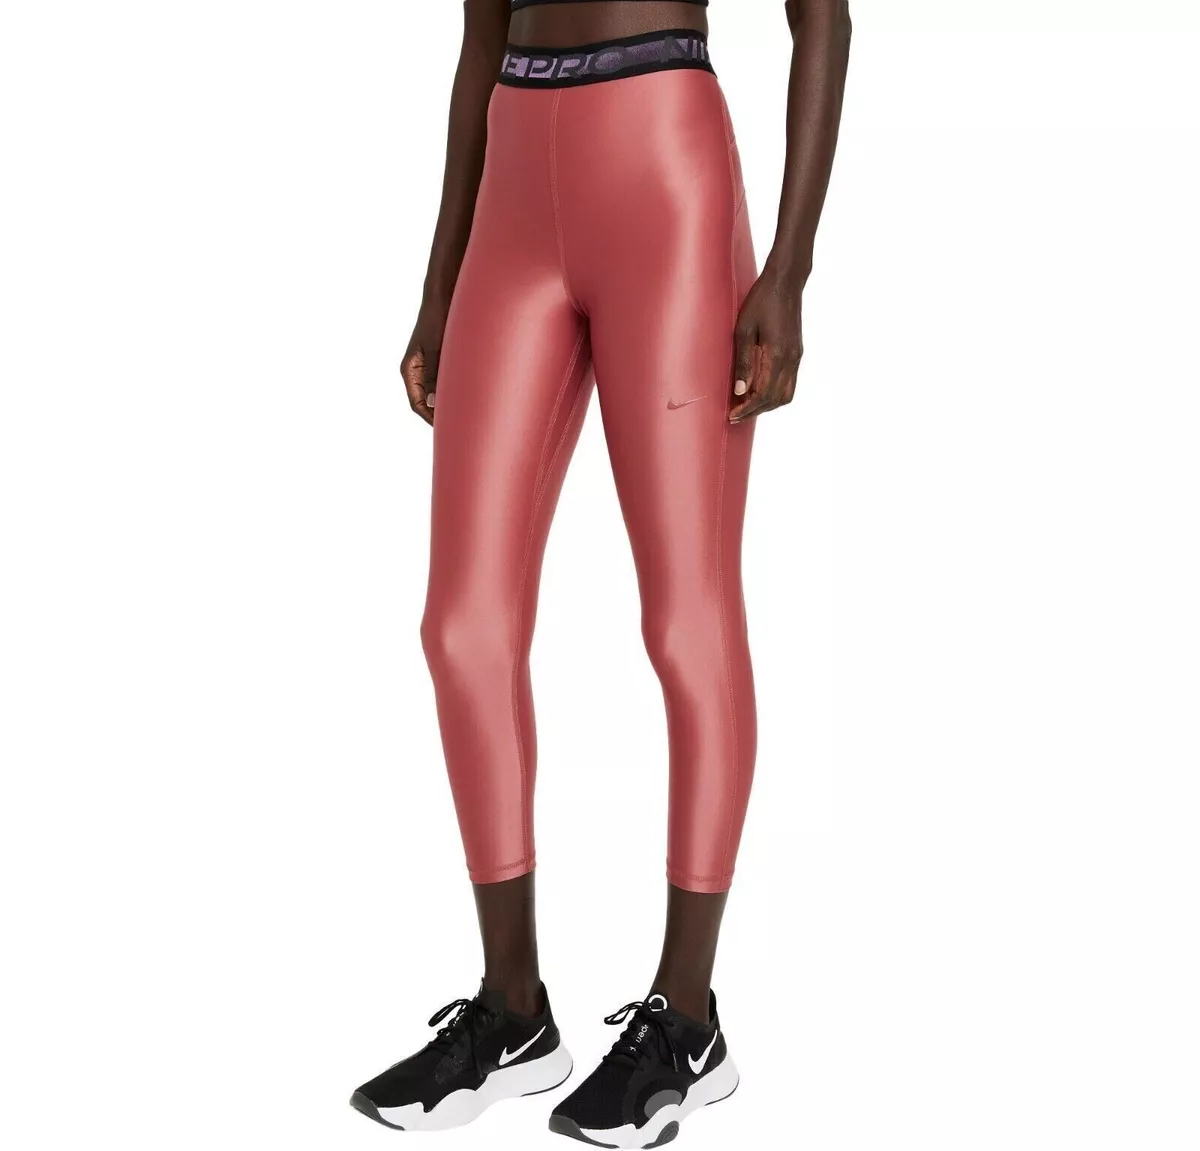 NWT Women's Nike Pro High Rise 7/8 Canyon Rust Leggings XXS MSRP $55.00